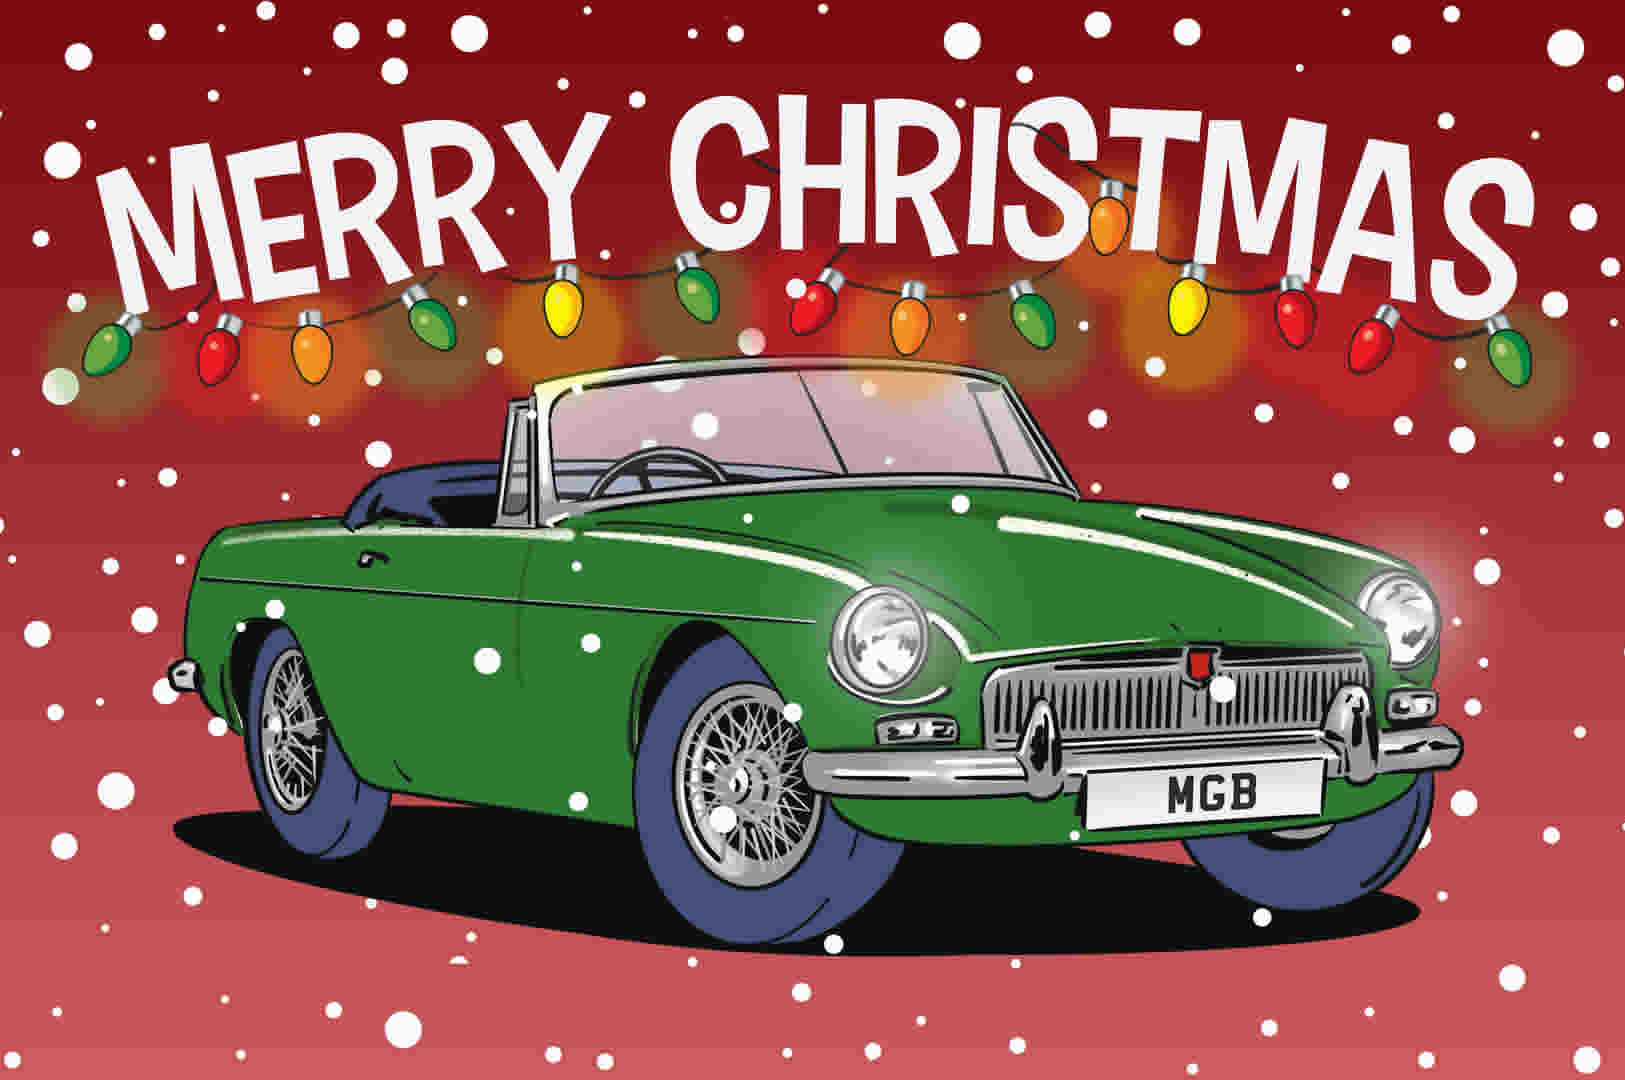 Green MGB Roadster Christmas Card